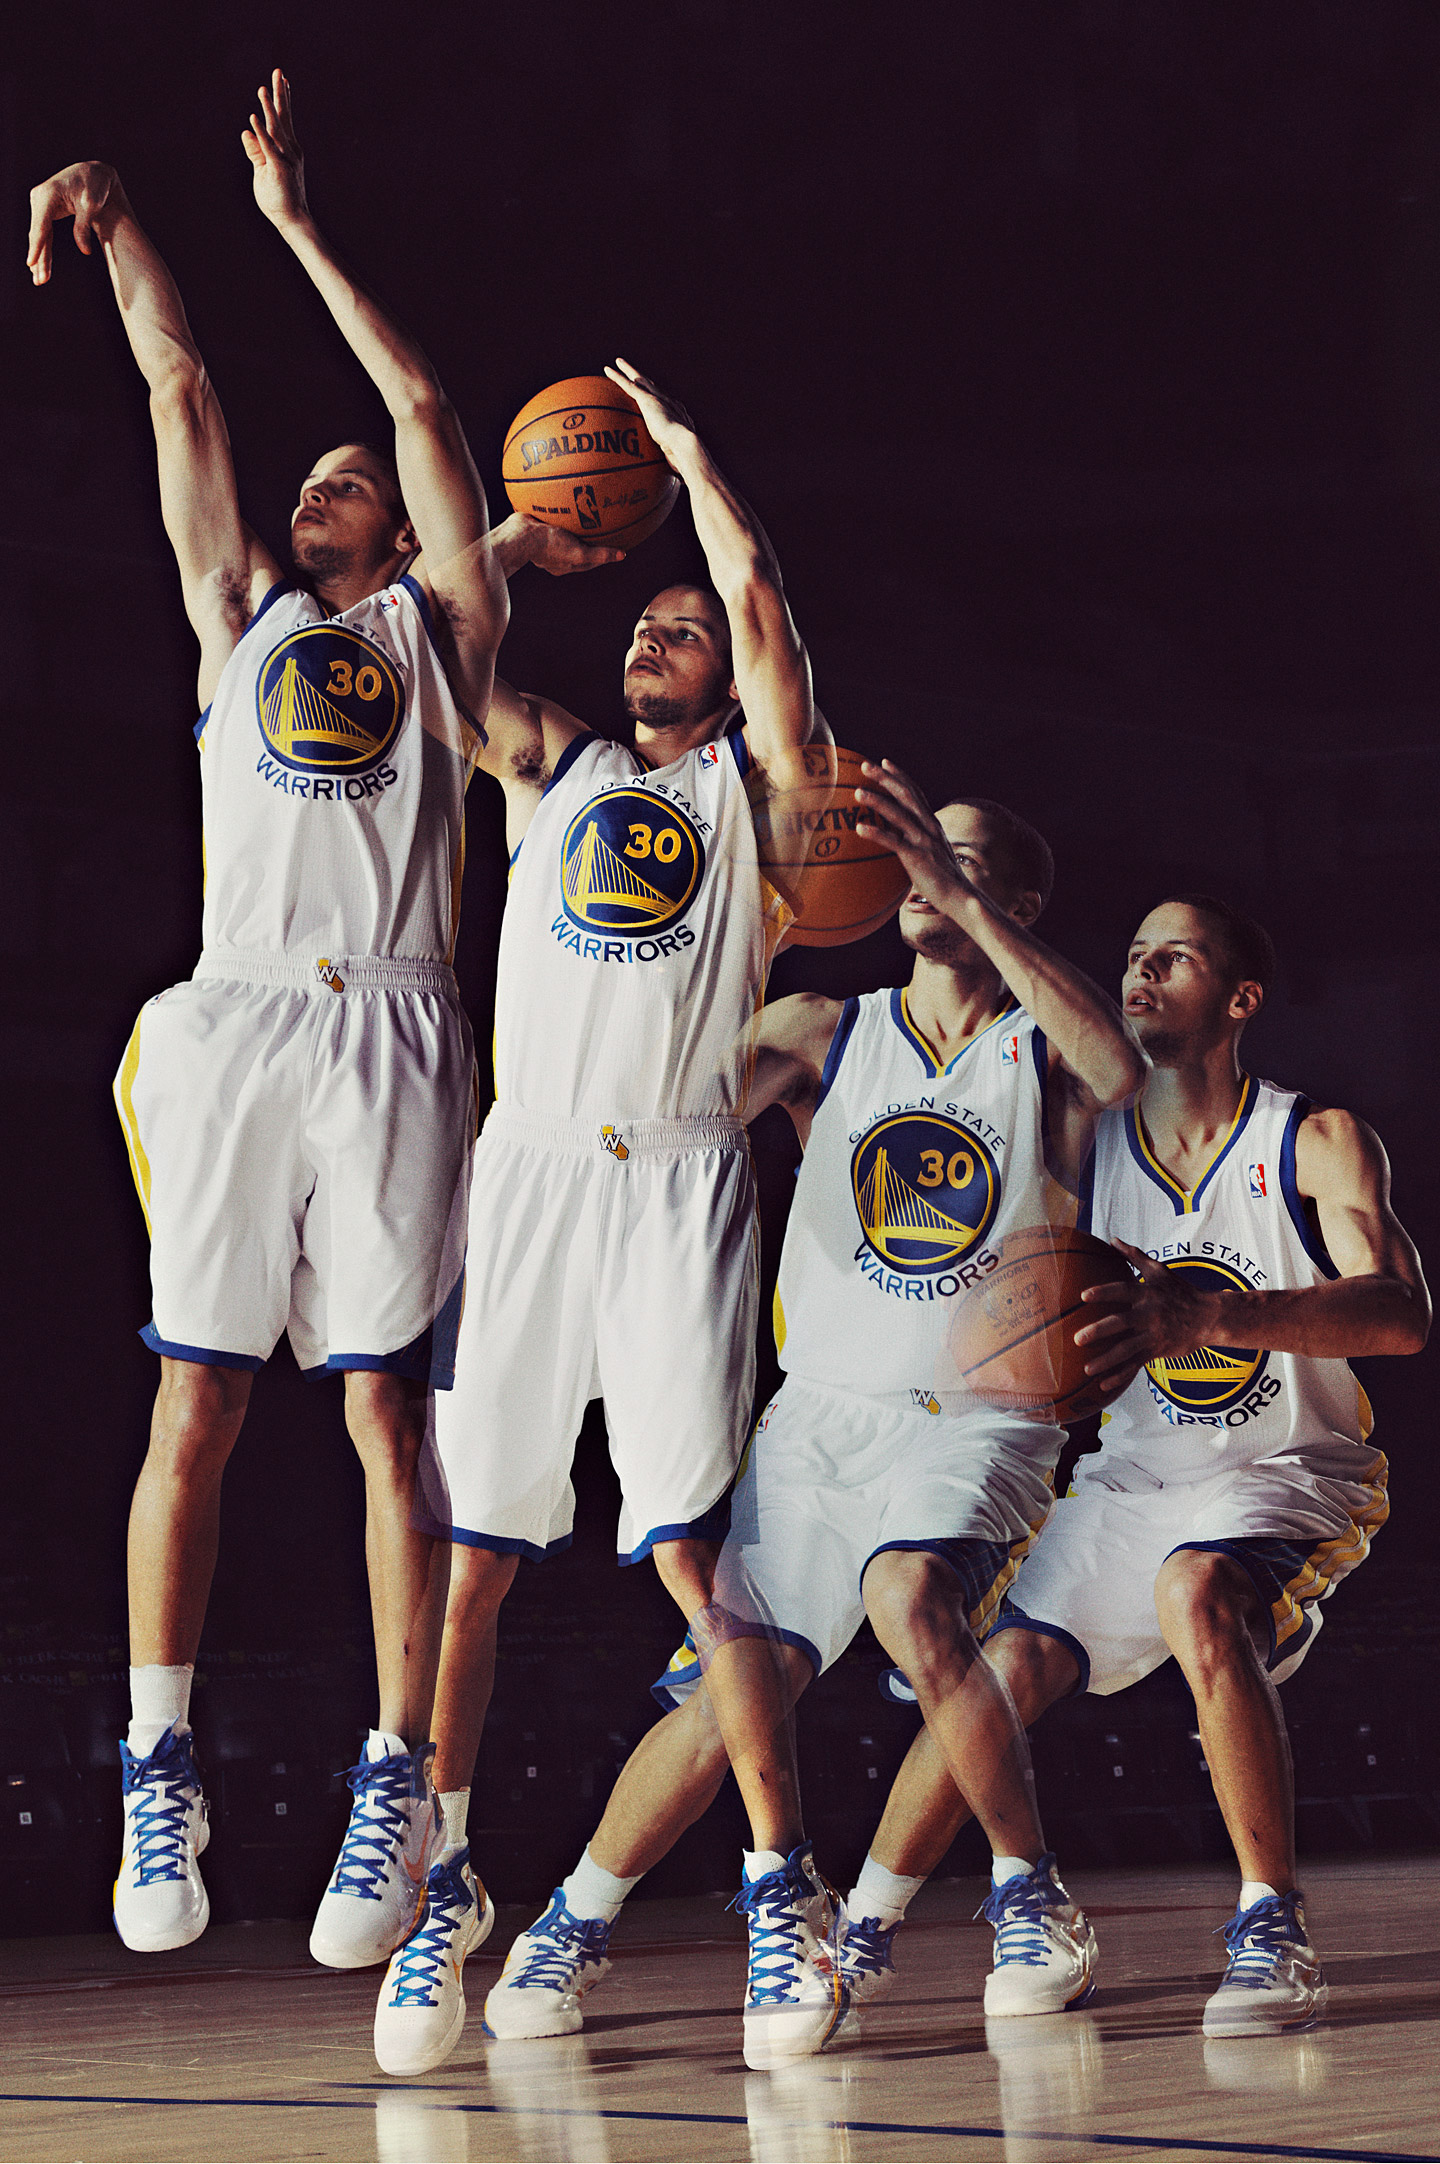 stephen curry shooting wallpaper,basketball player,basketball,team sport,team,basketball court